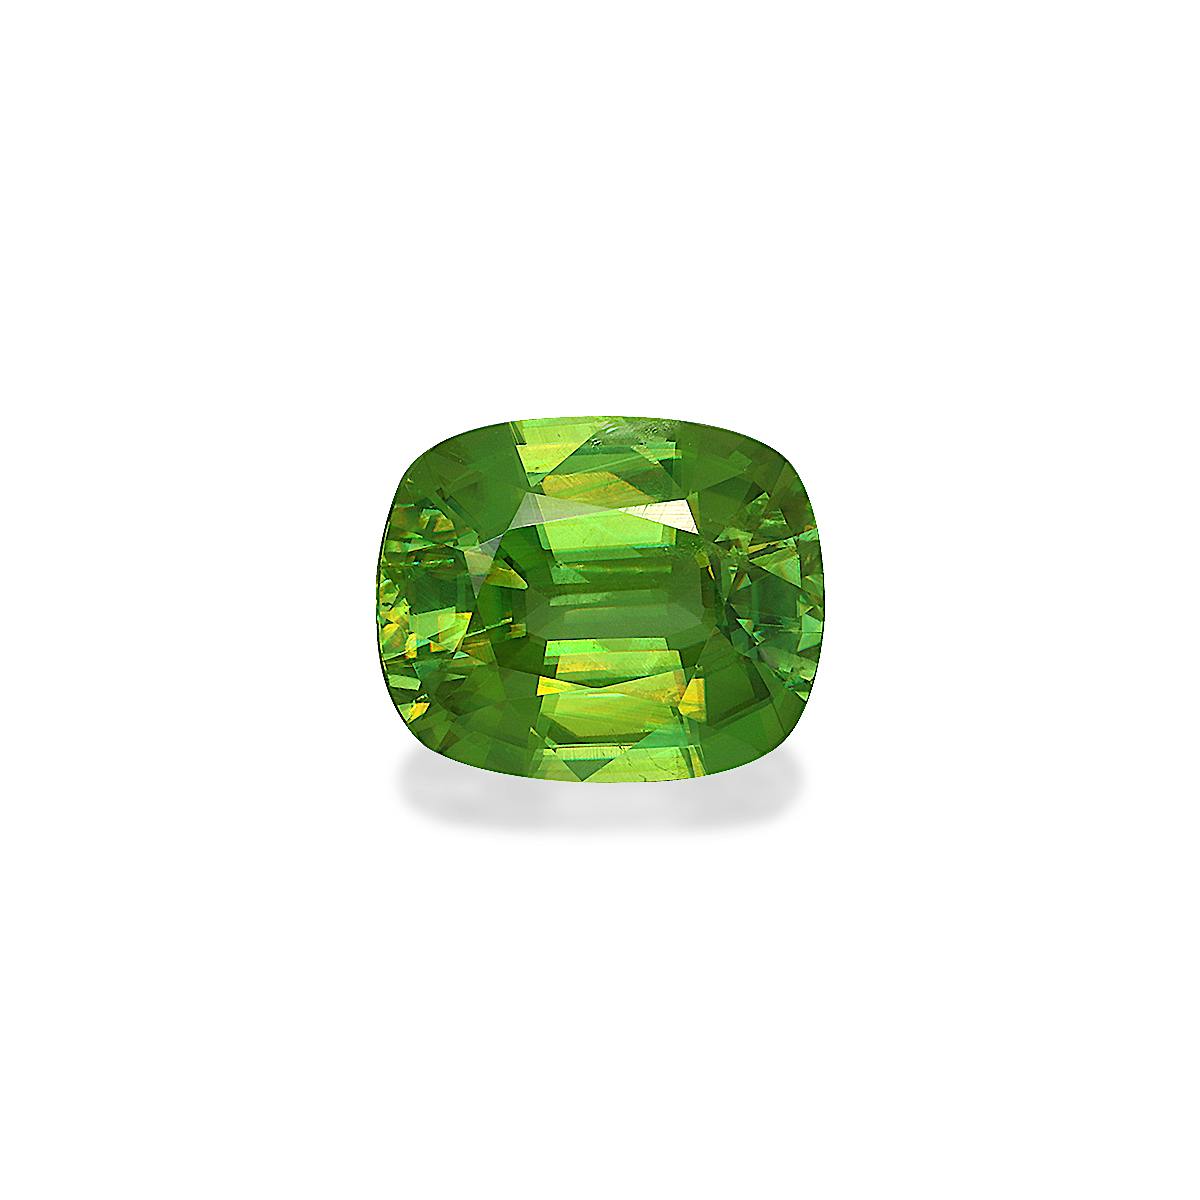 Green Sphene 4.66ct - Main Image